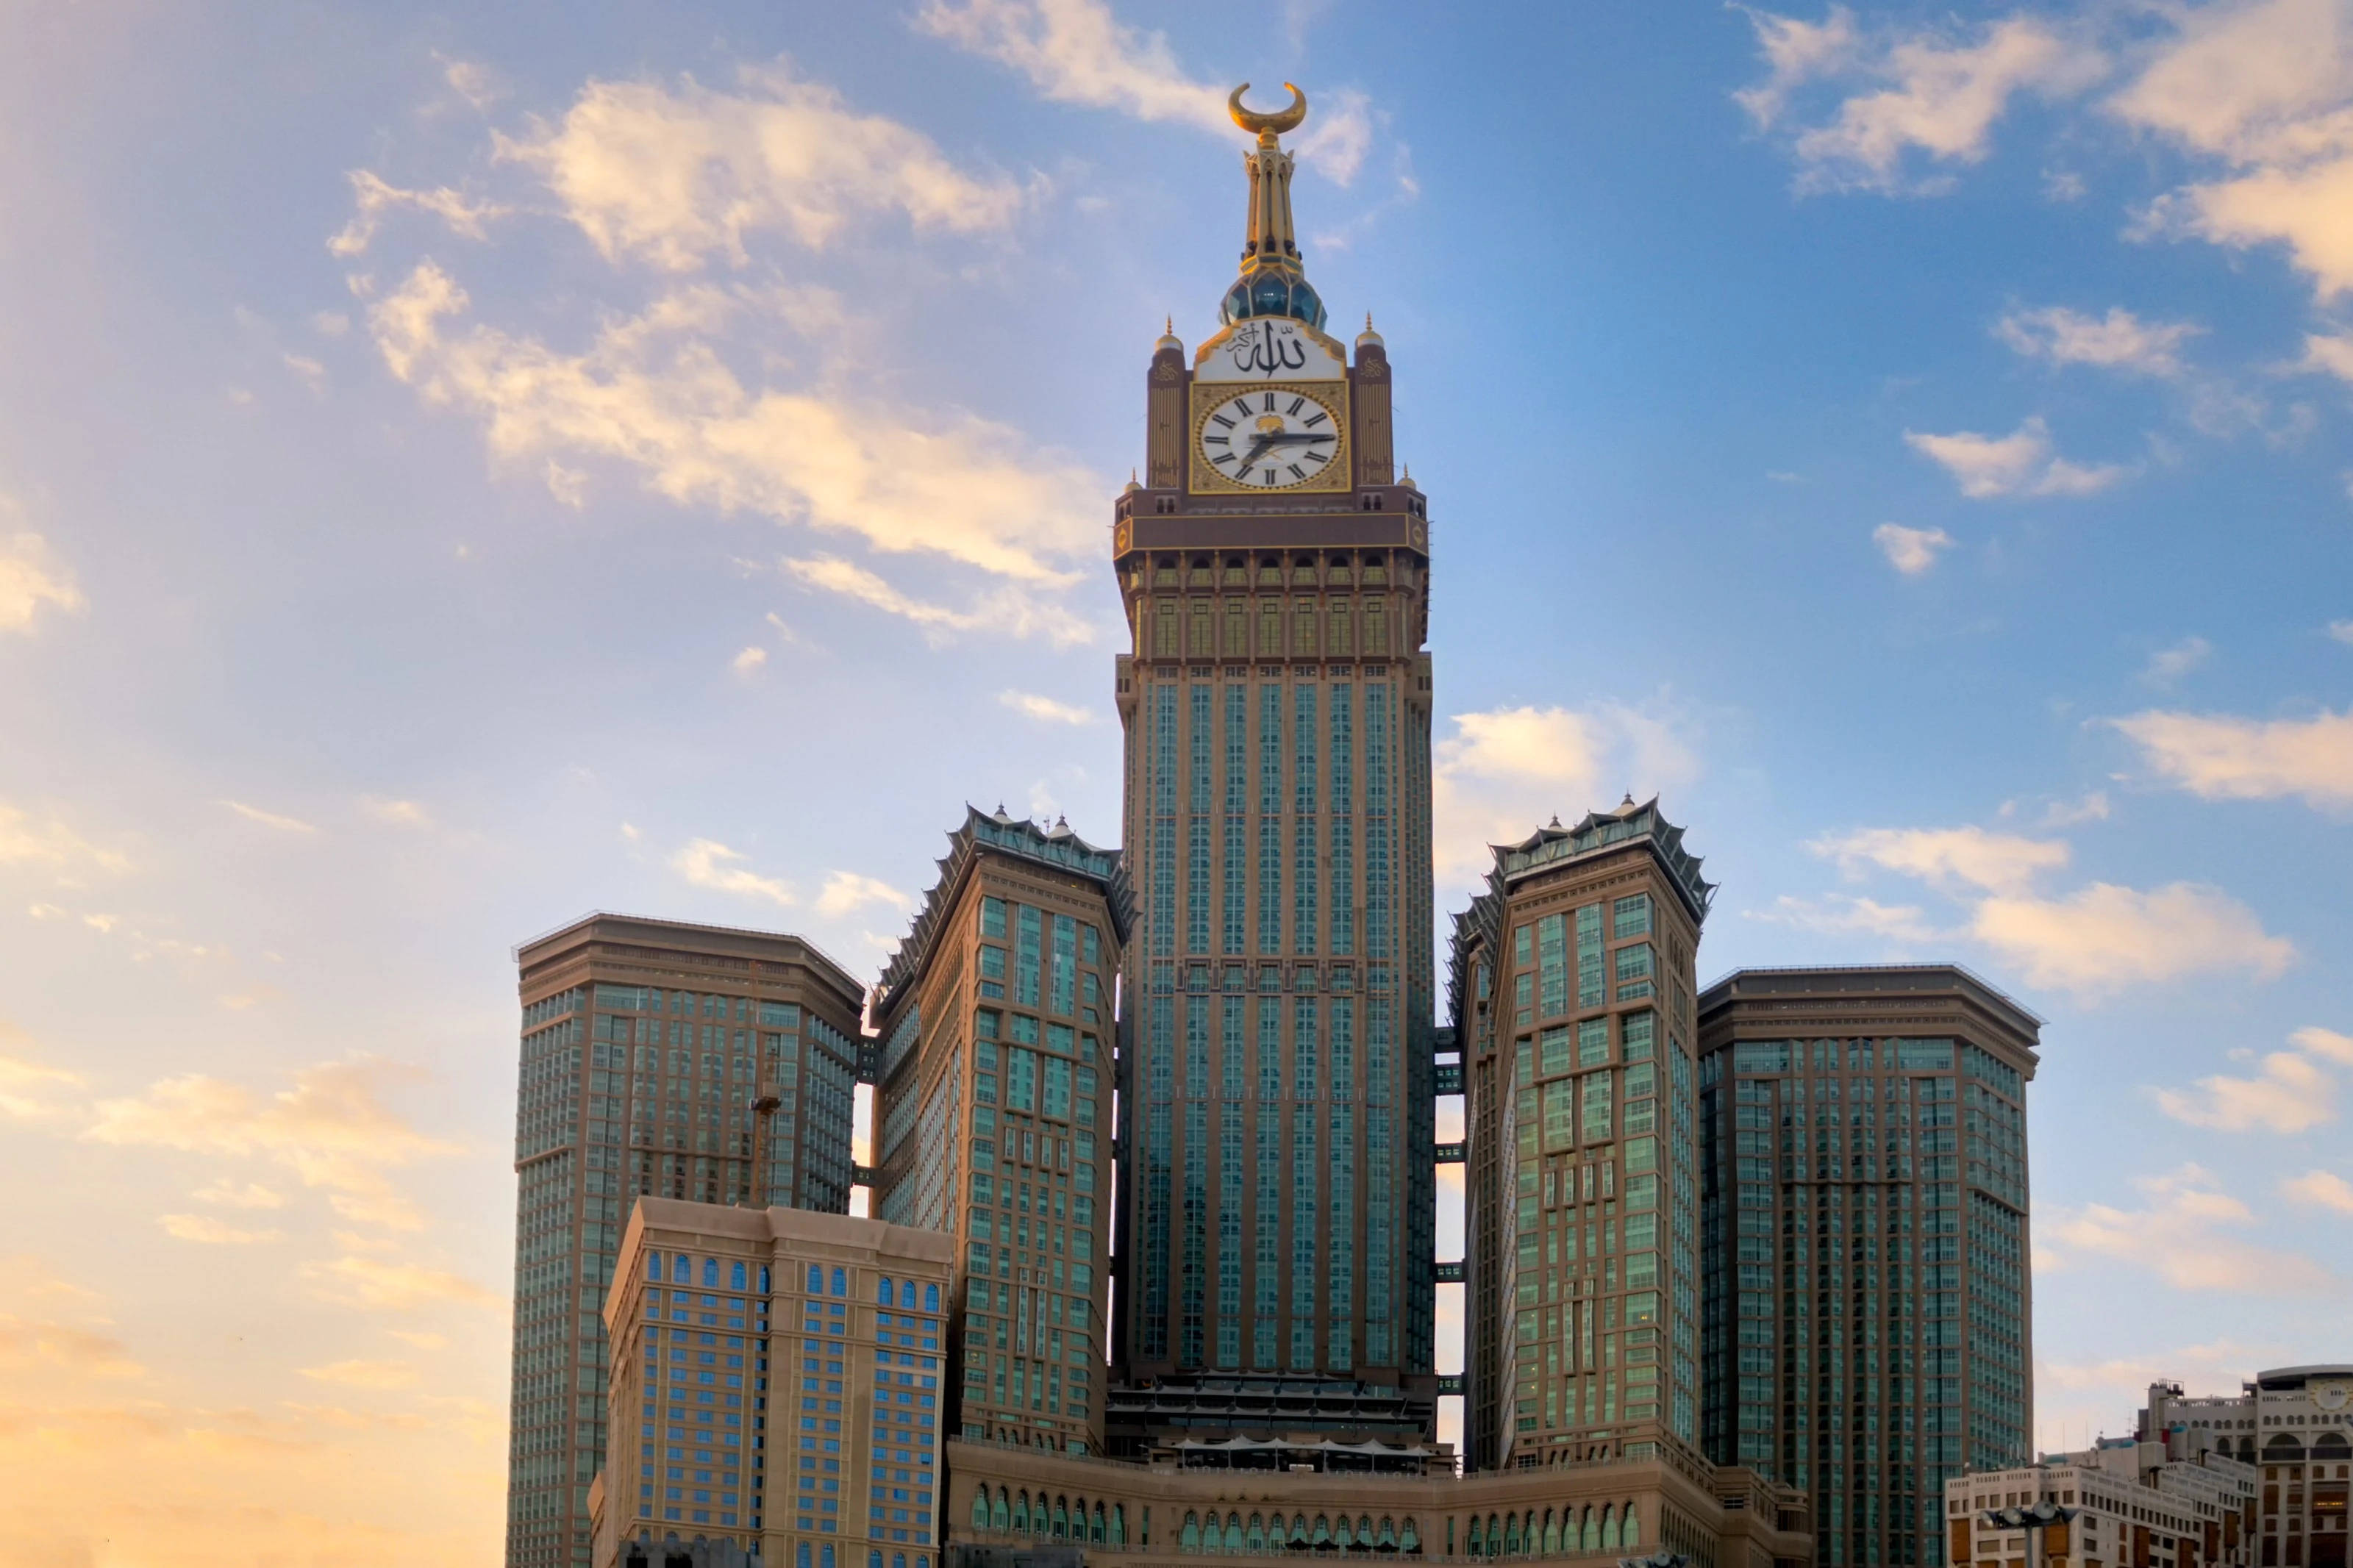 Royal tower hotel. Башня Абрадж Аль-Бейт. Часовая башня Абрадж Аль-Бейт. Часовой башне Абрадж Аль-Бейт в Мекке. Брадж Аль-Бейт, Мекка, Саудовская Аравия.